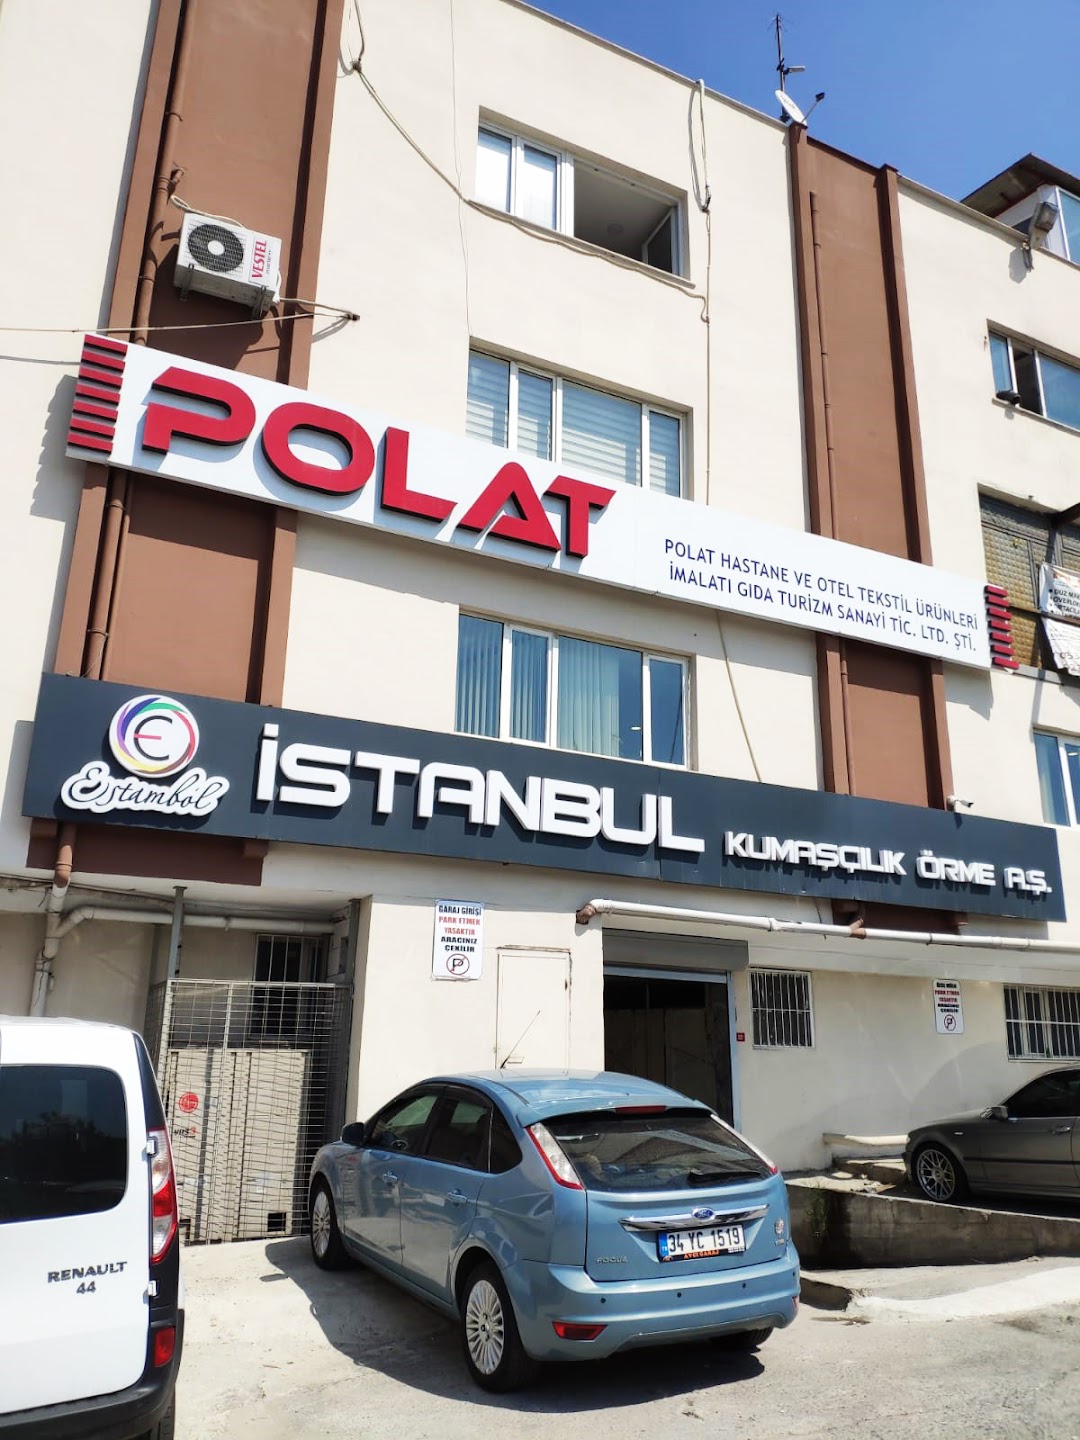 Polat Tıbbi Tekstil - Otel Tekstili - Hastane Tekstili malatı